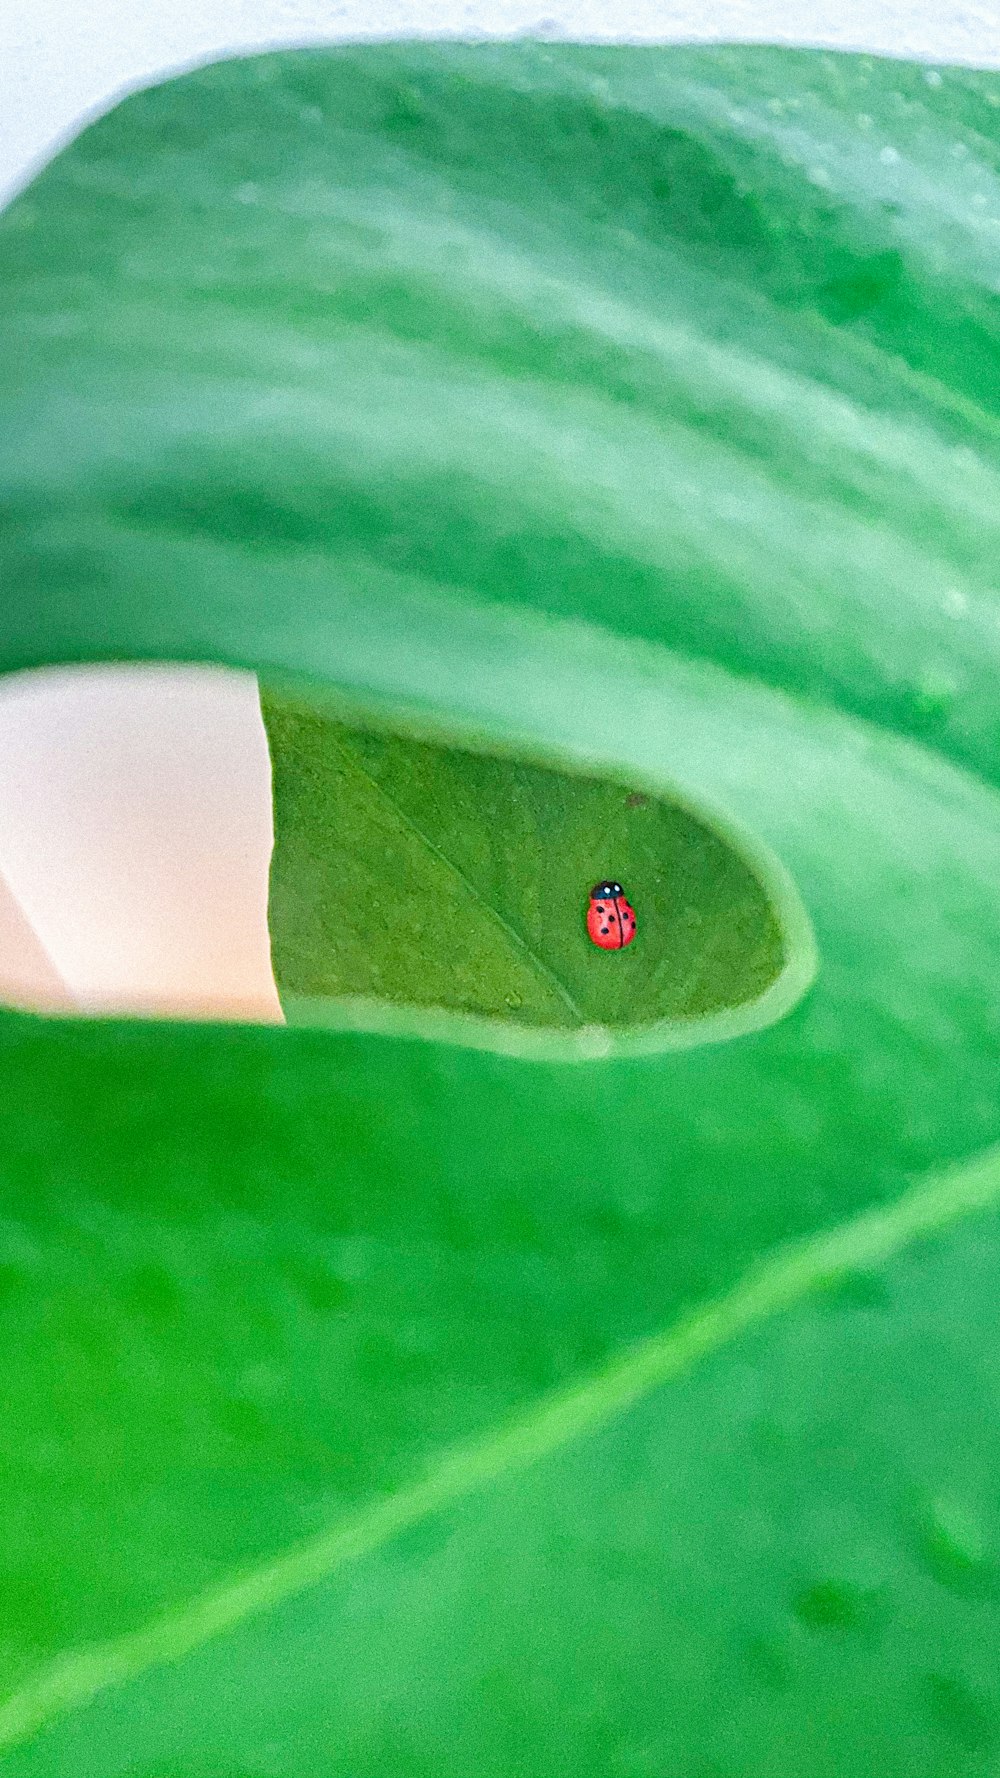 brown bug on green leaf